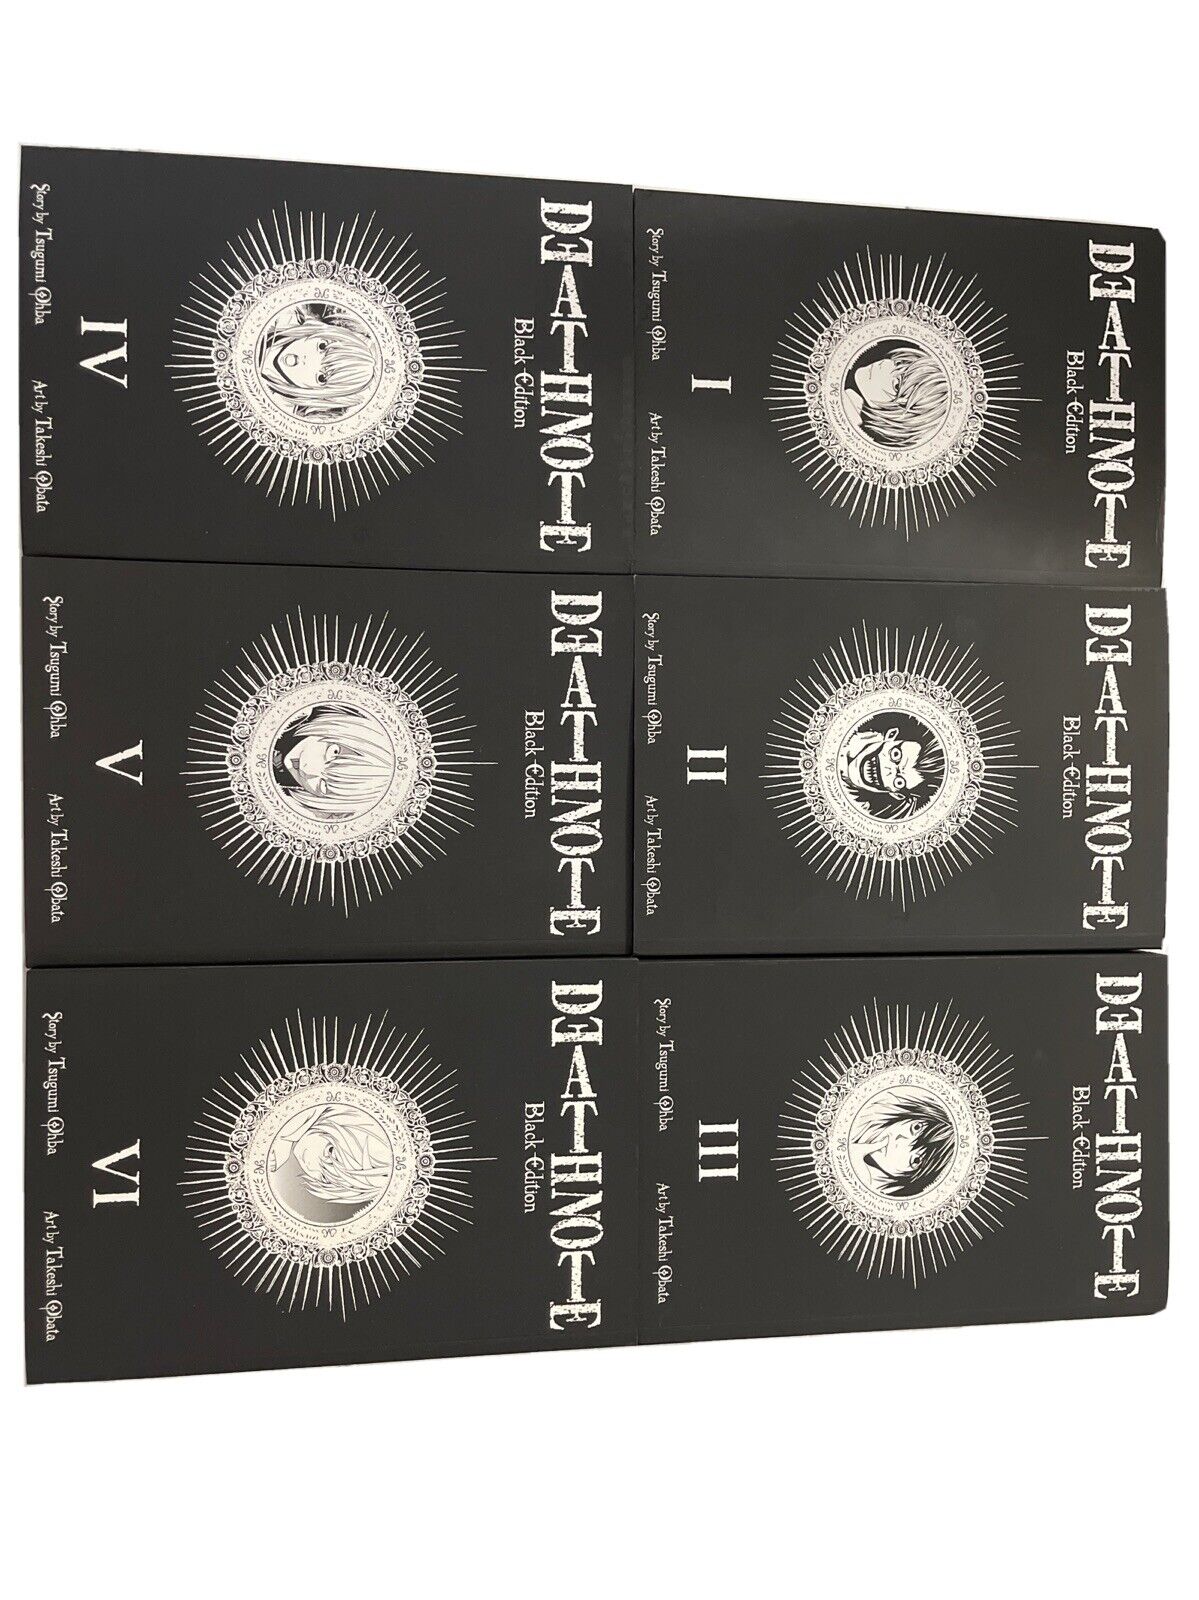 Deathnote Black Edition Complete Set Vol. 1-6